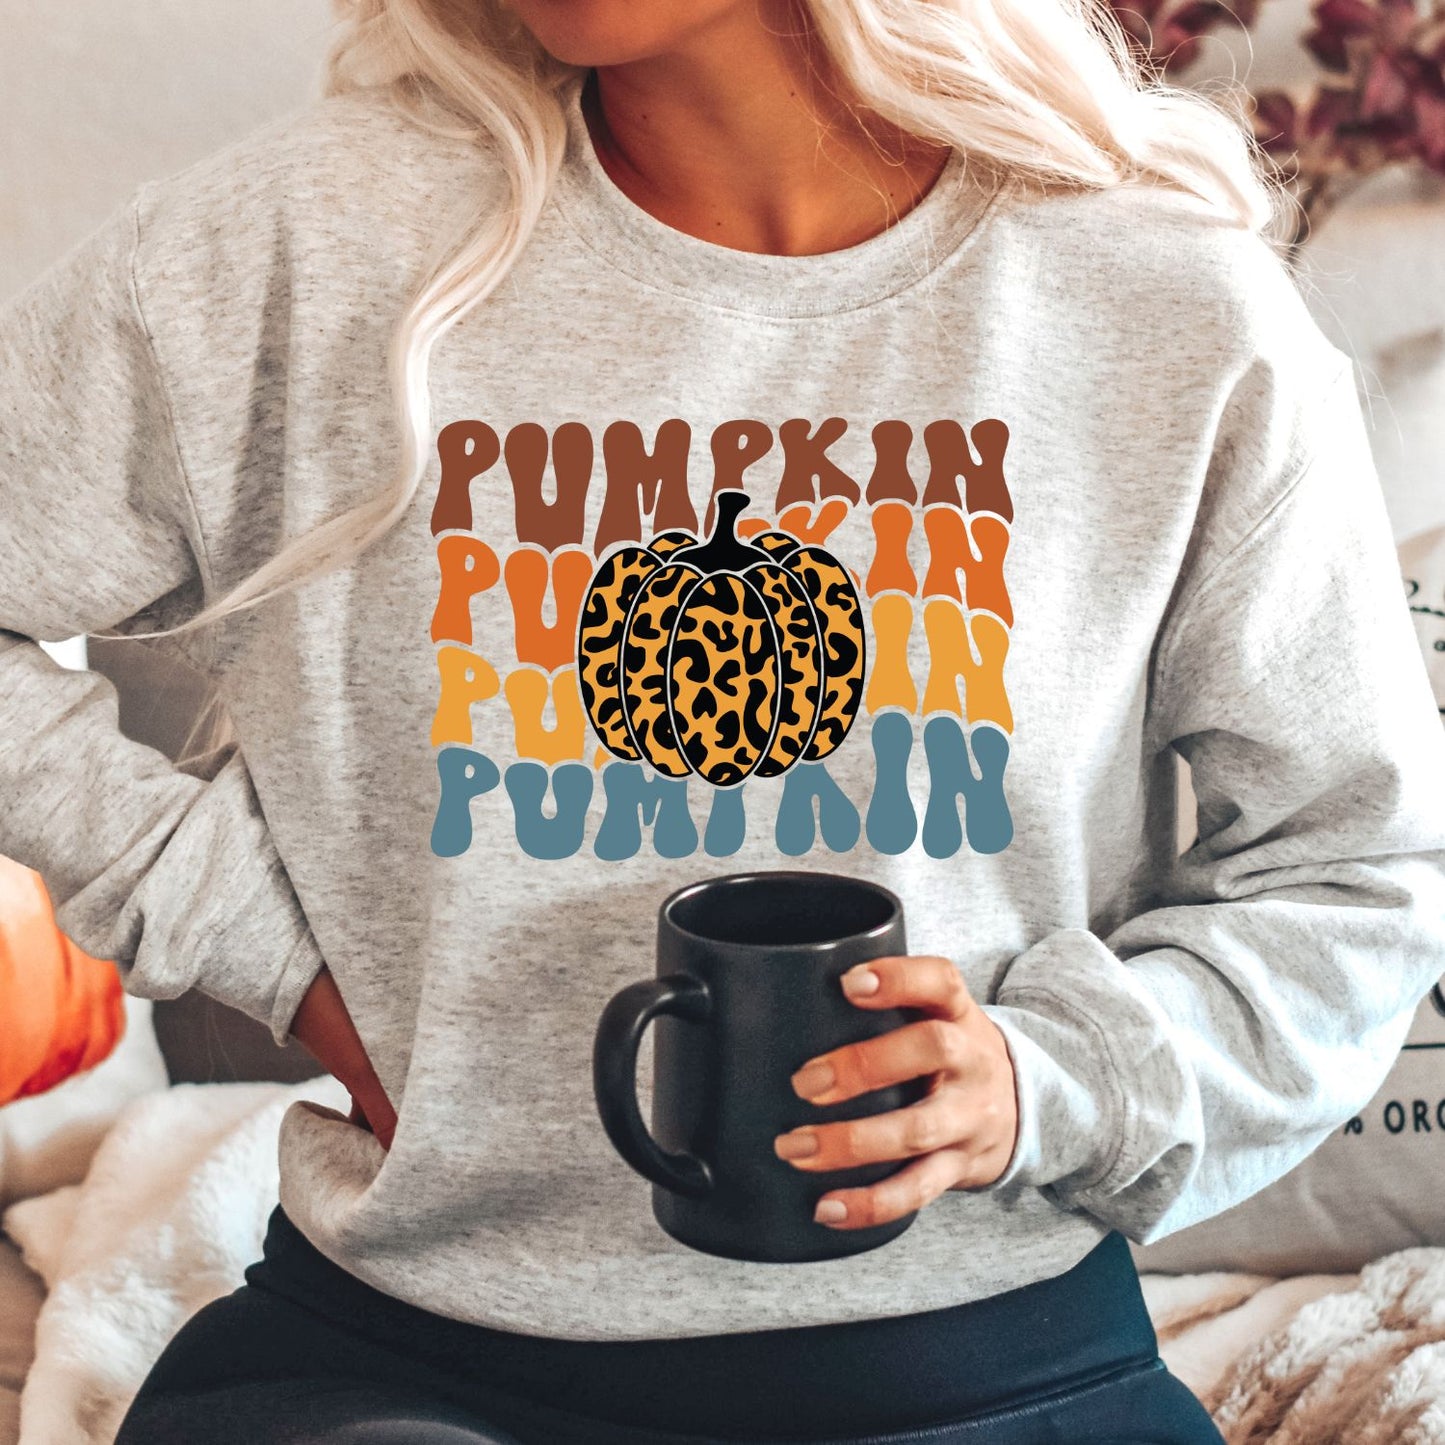 Leopard Pumpkin Sweatshirt